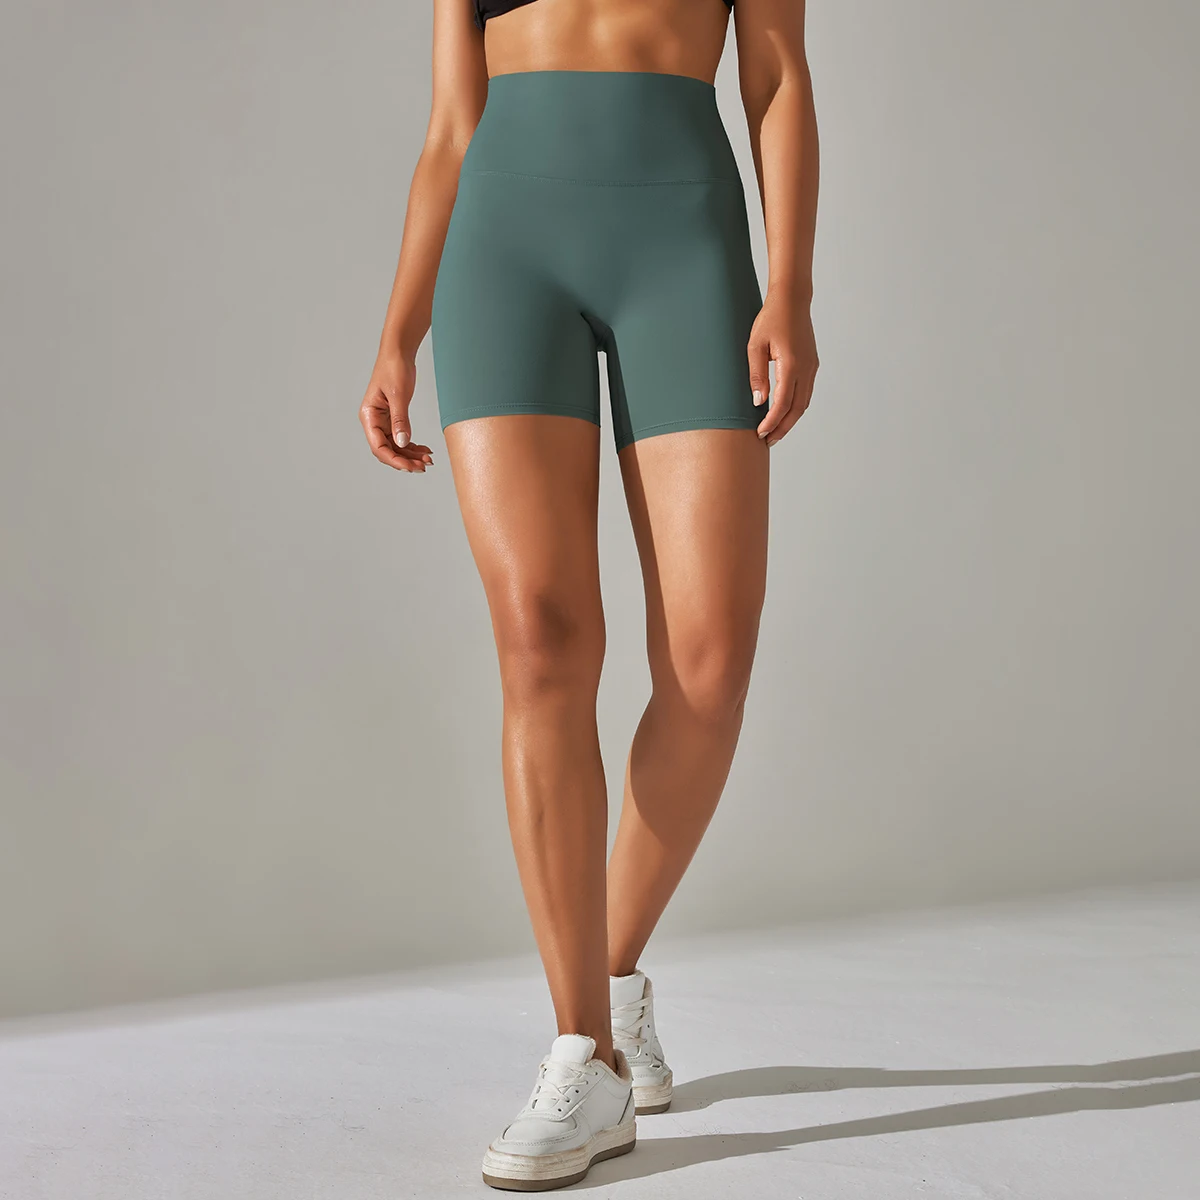 Yoga Shorts Women Fitness Shorts Running Cycling Shorts Breathable Sports Leggings High Waist Summer Workout Gym Shorts